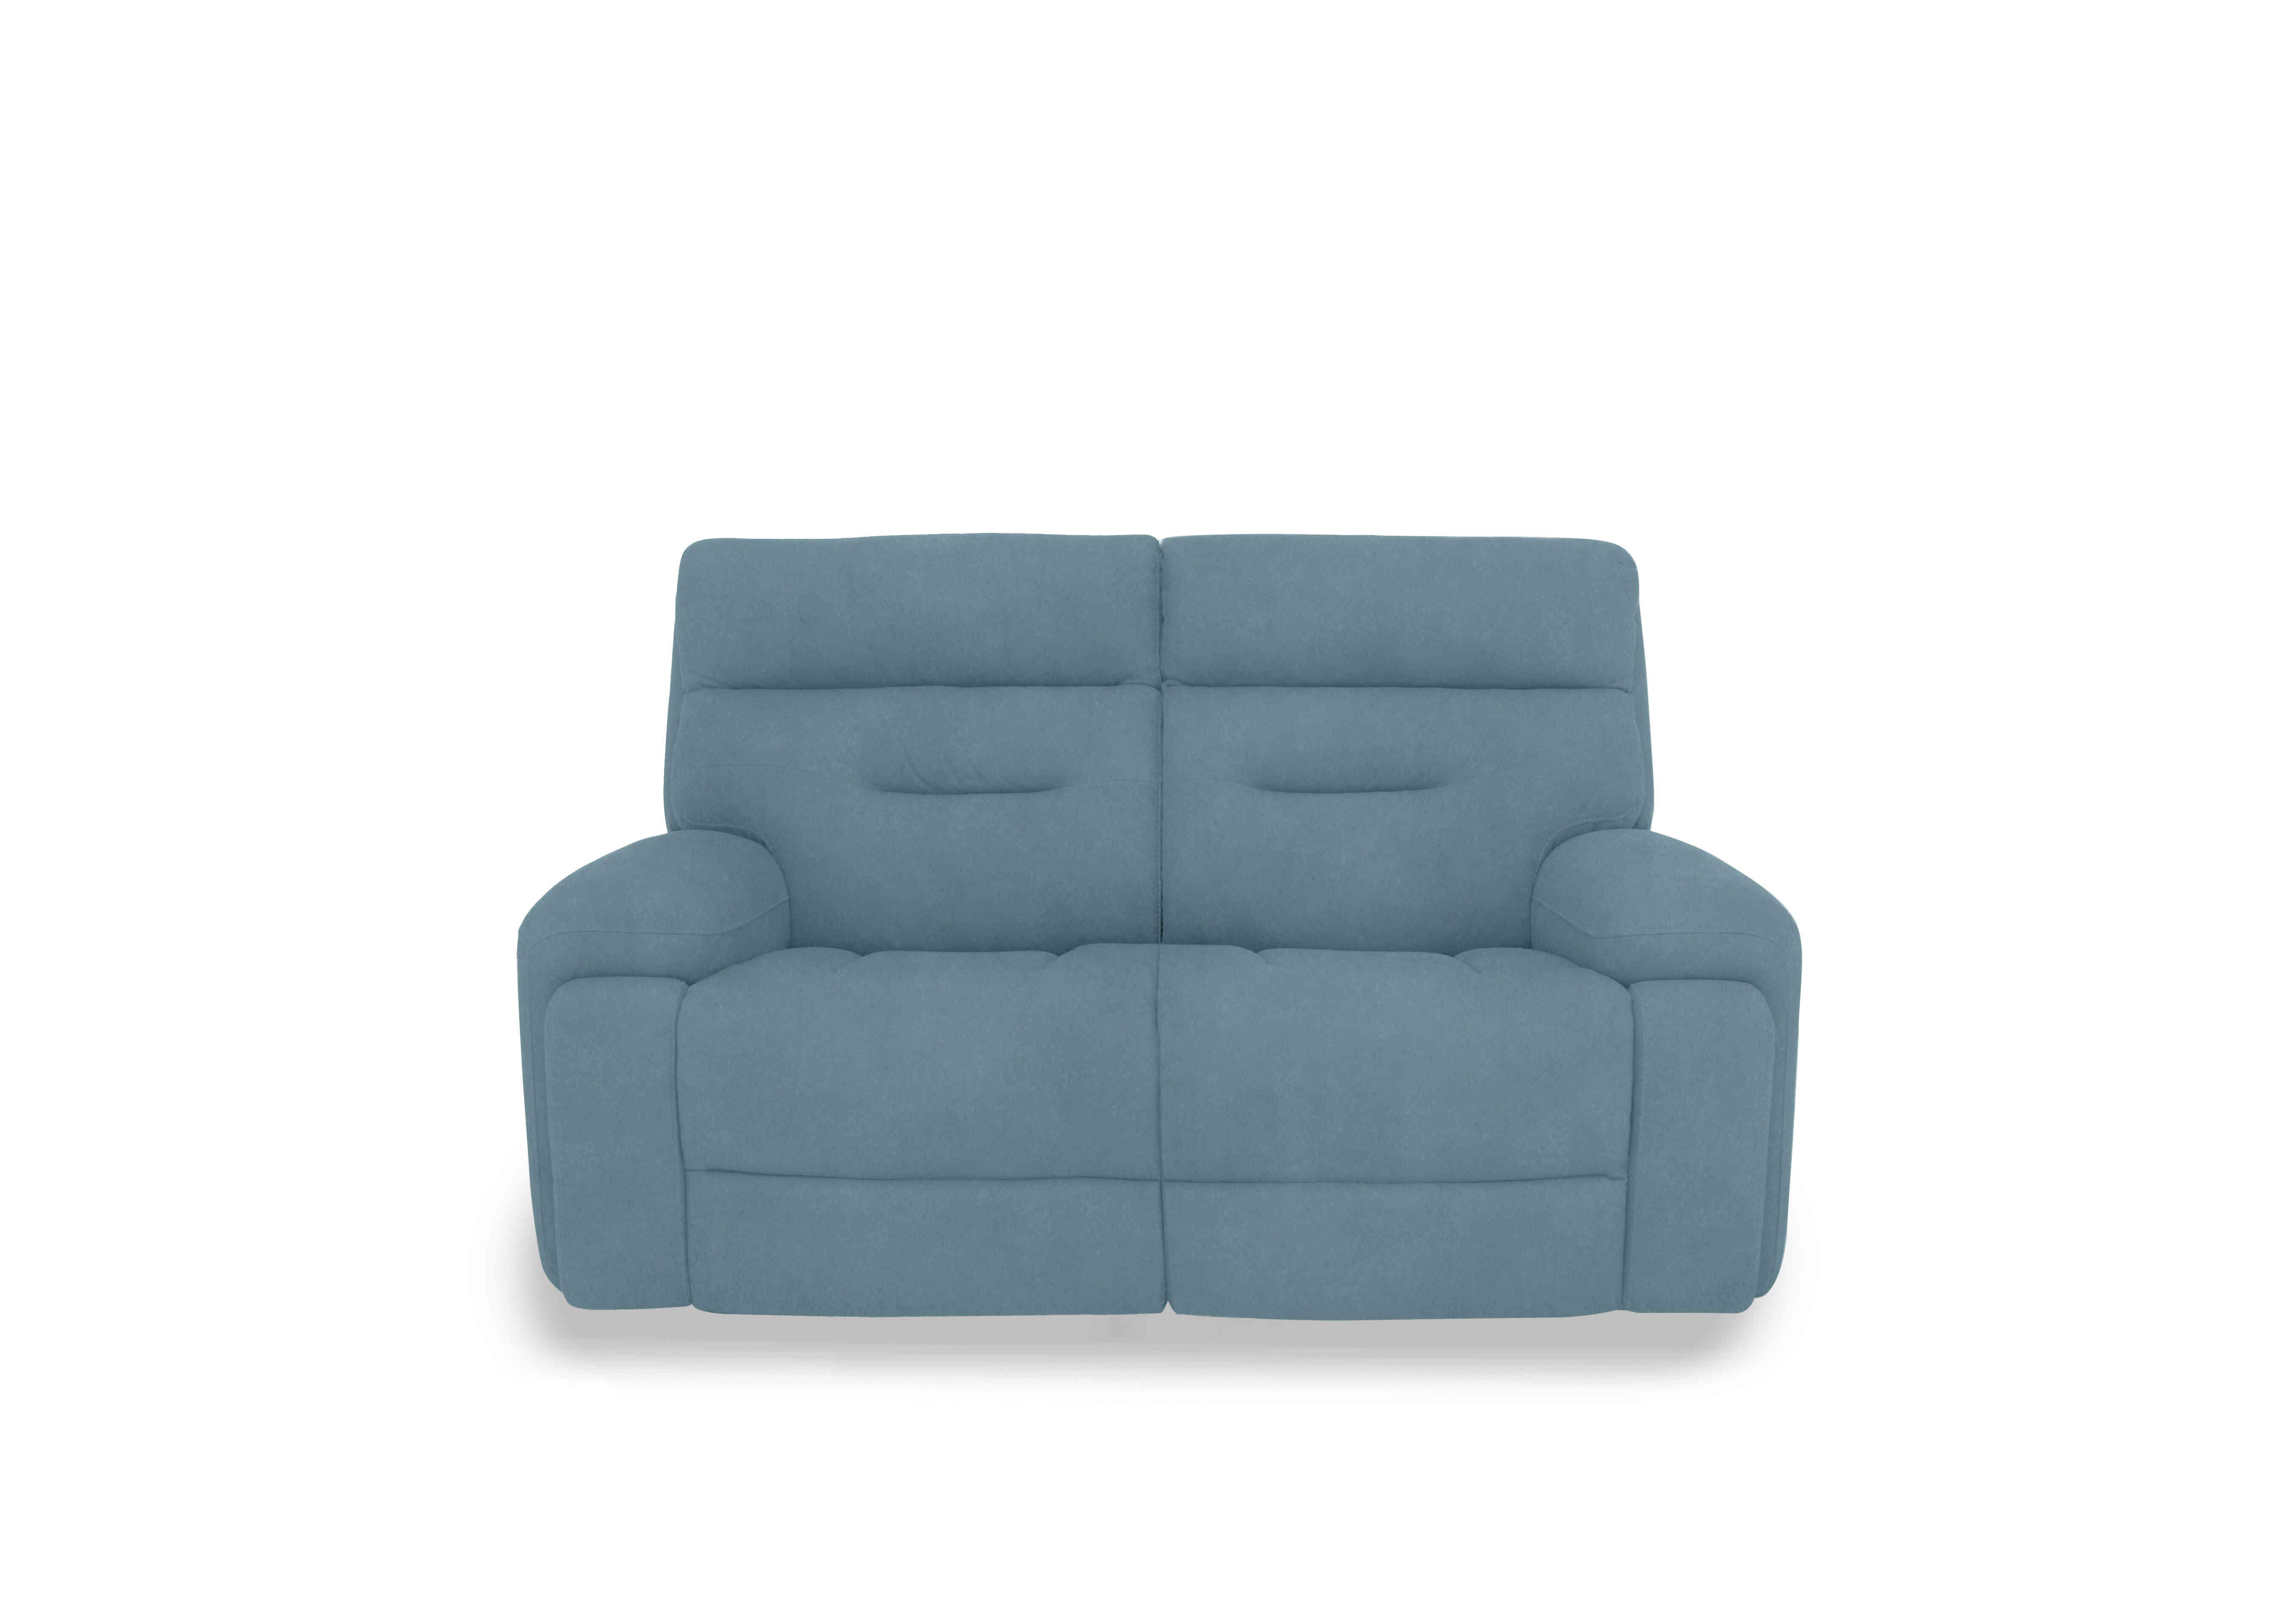 Cinemax 2 Seater Fabric Sofa in Vv-0312 Velvet Blu on Furniture Village